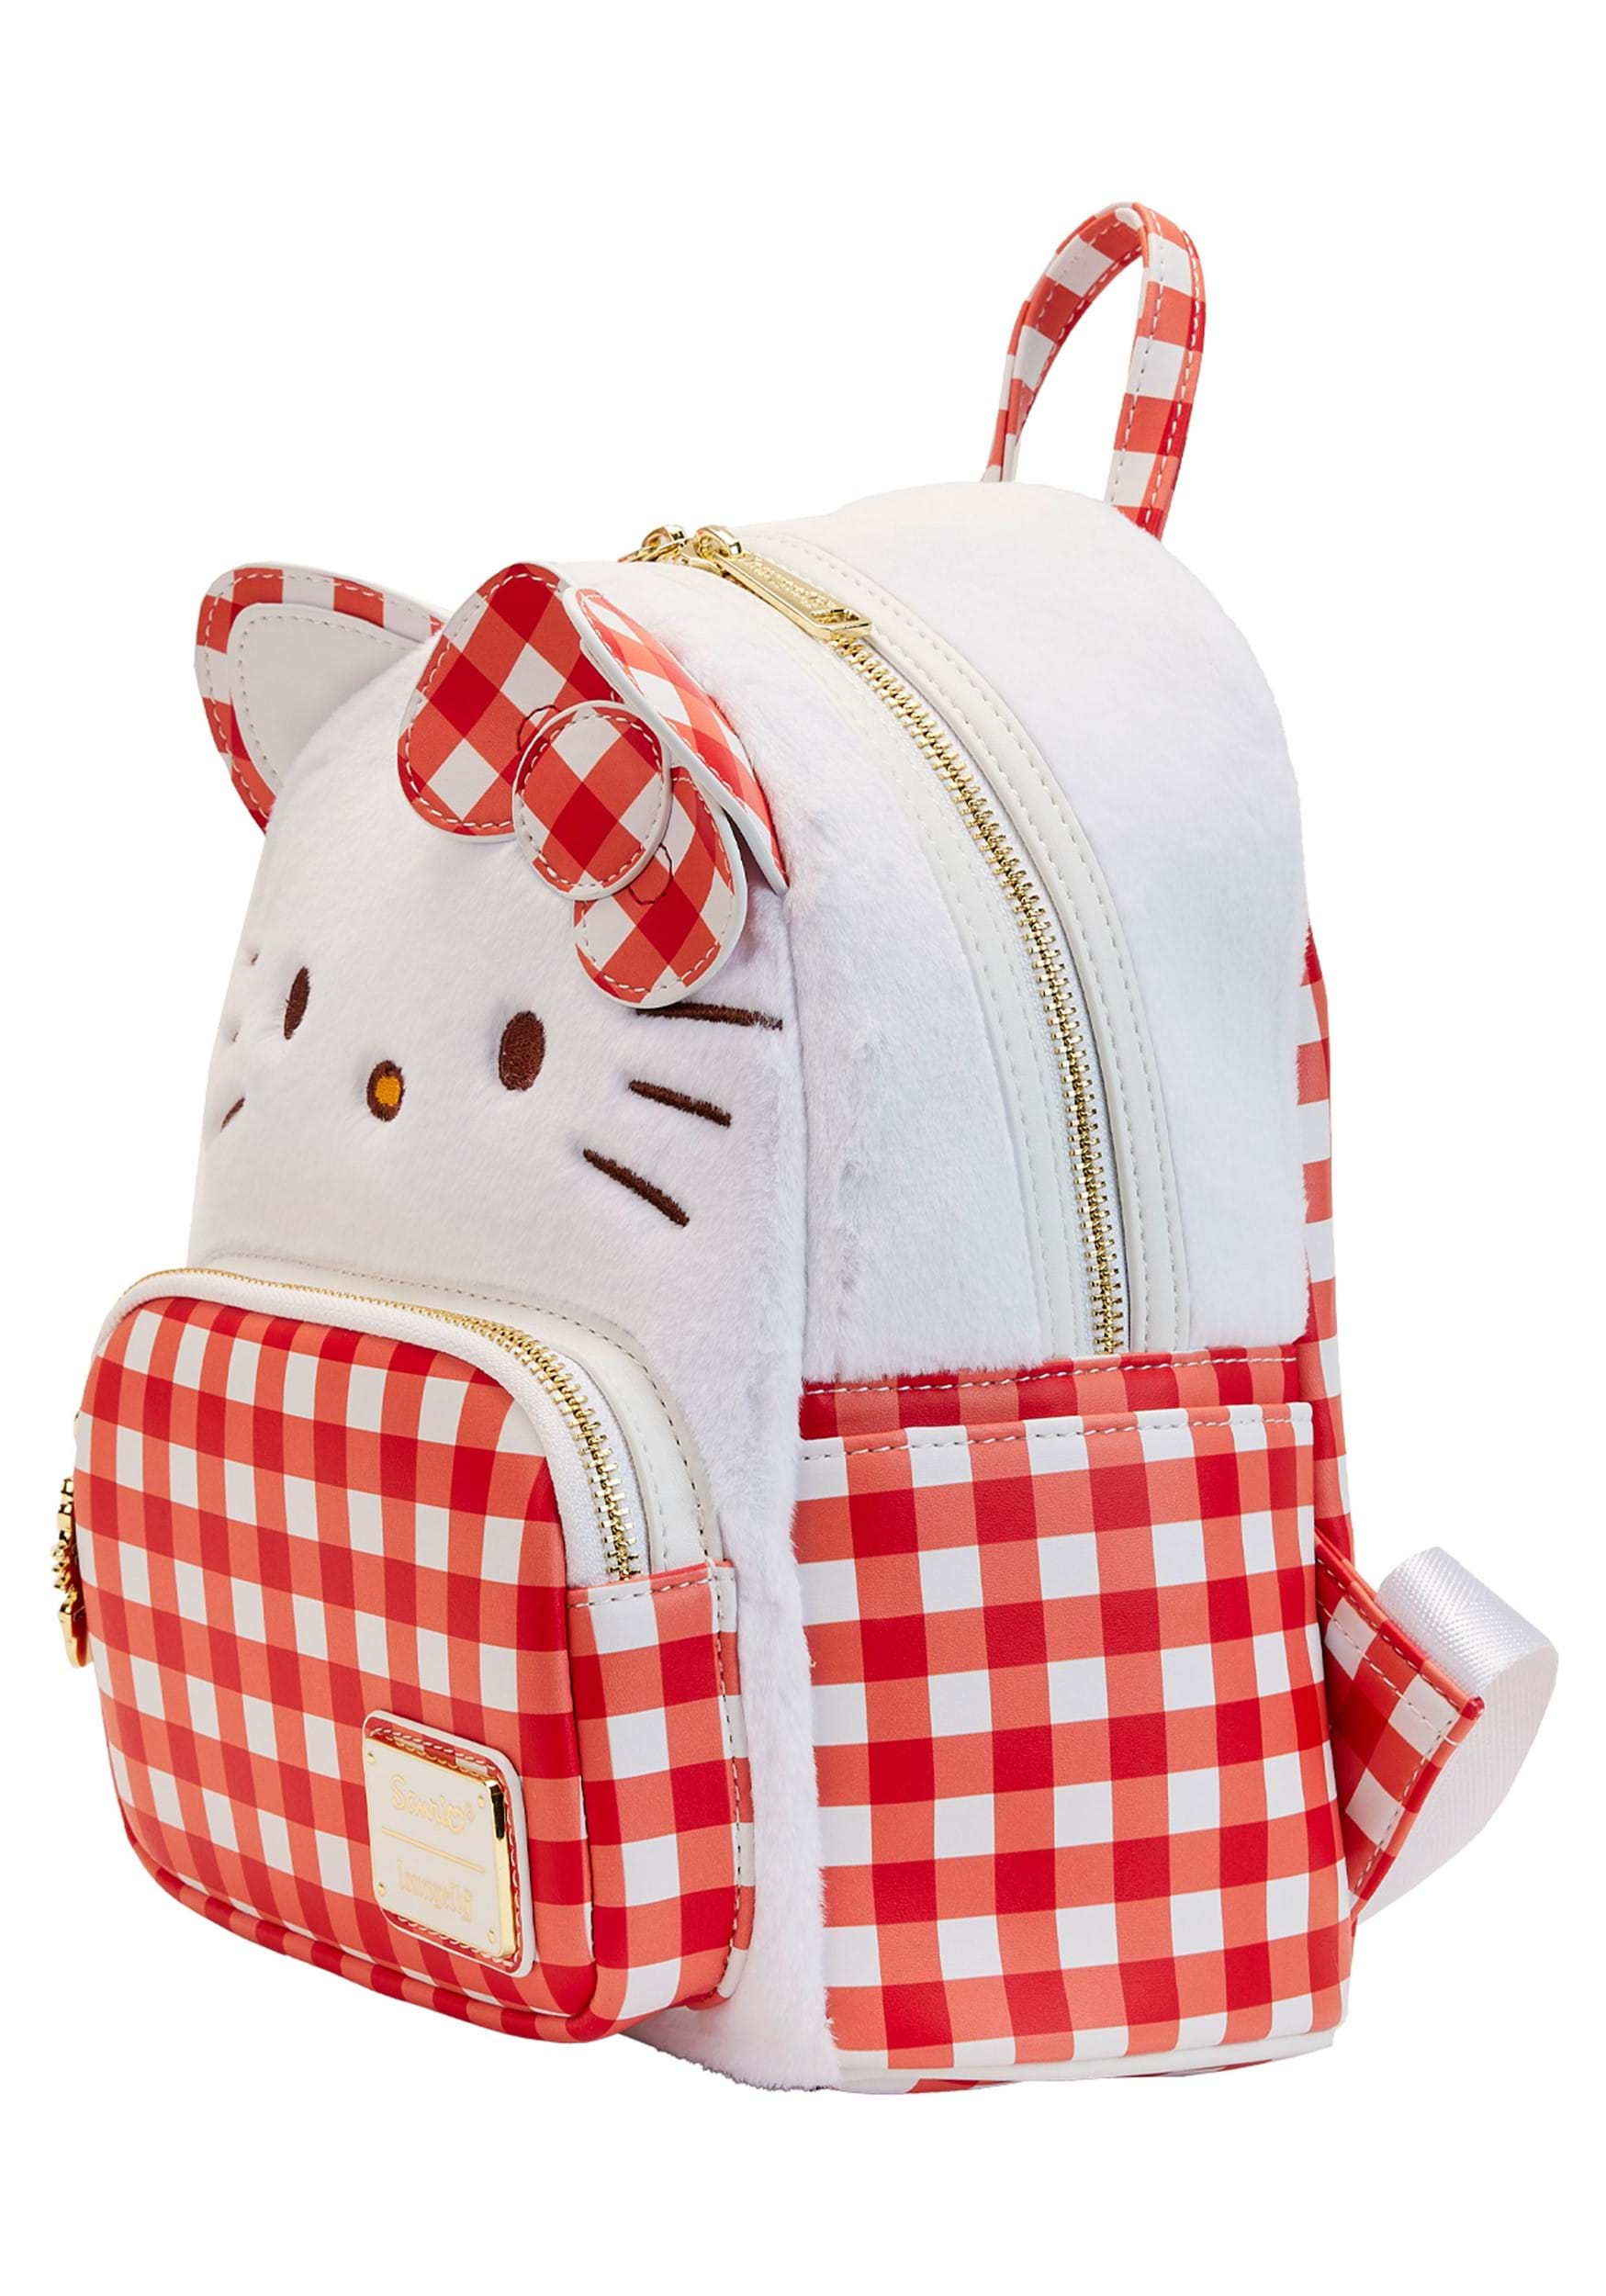 Hello Kitty Breakfast Waffle Mini Backpack